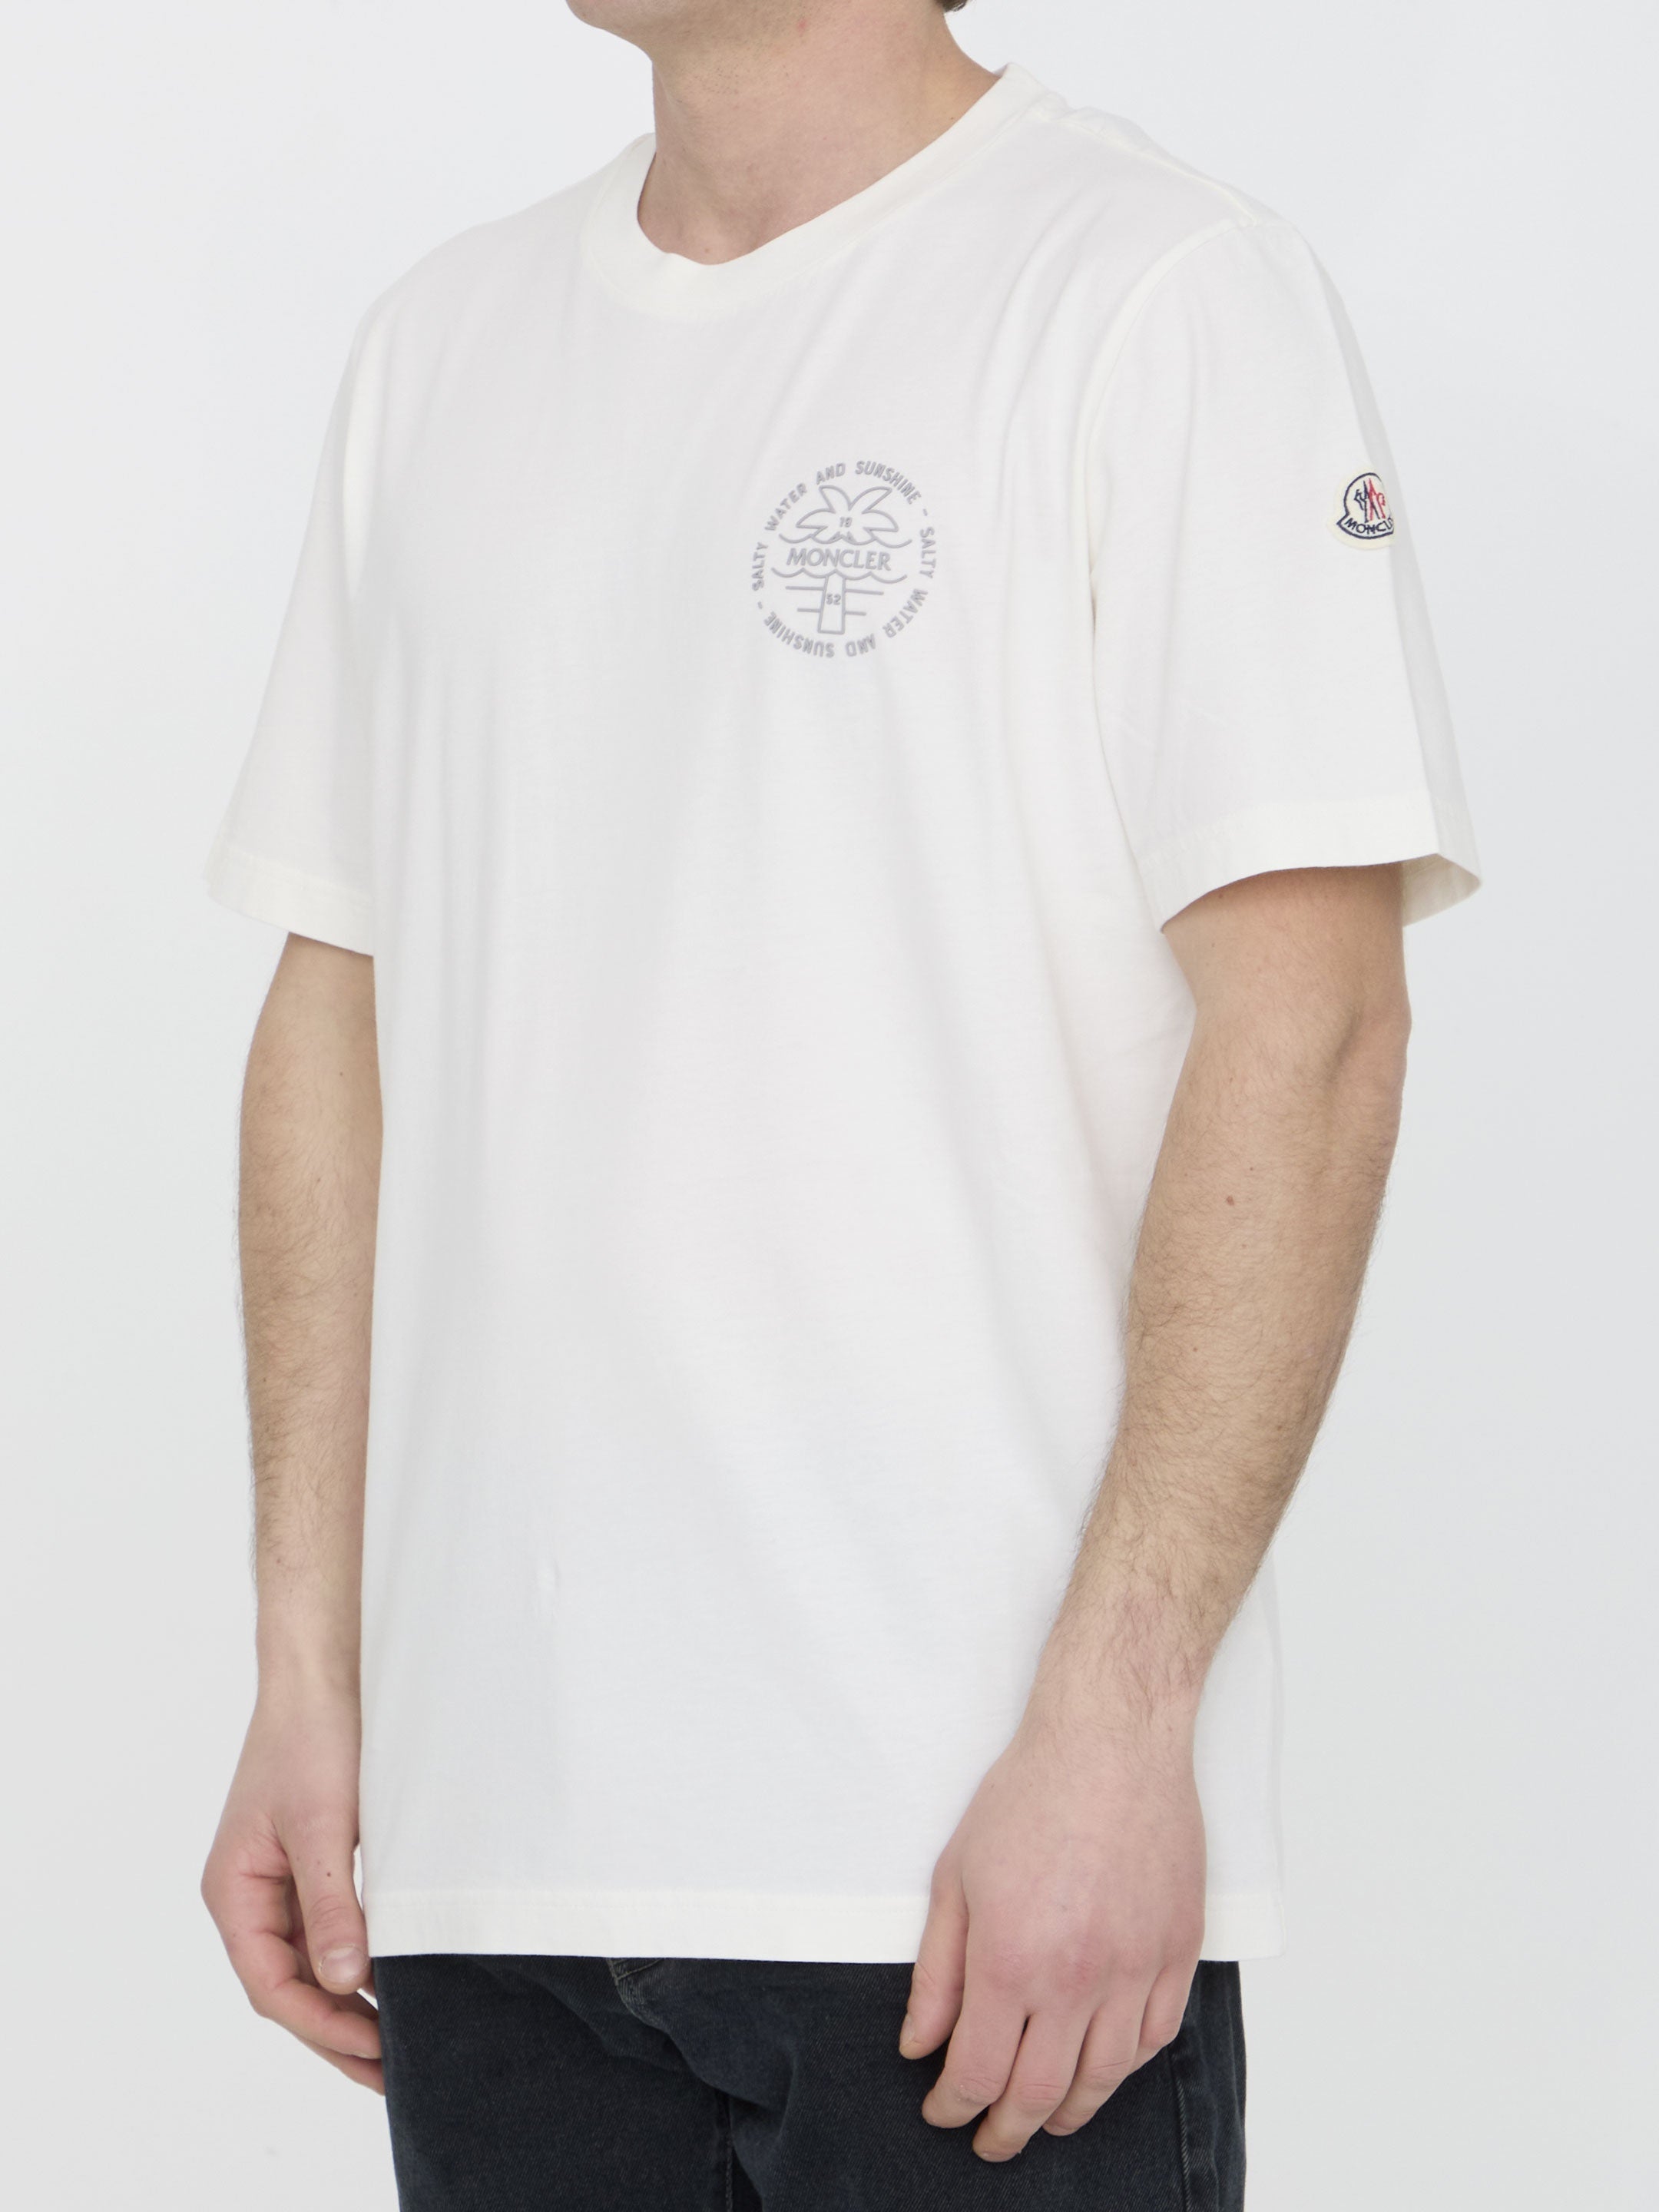 MONCLER-OUTLET-SALE-Cotton-t-shirt-Shirts-L-WHITE-ARCHIVE-COLLECTION-2.jpg